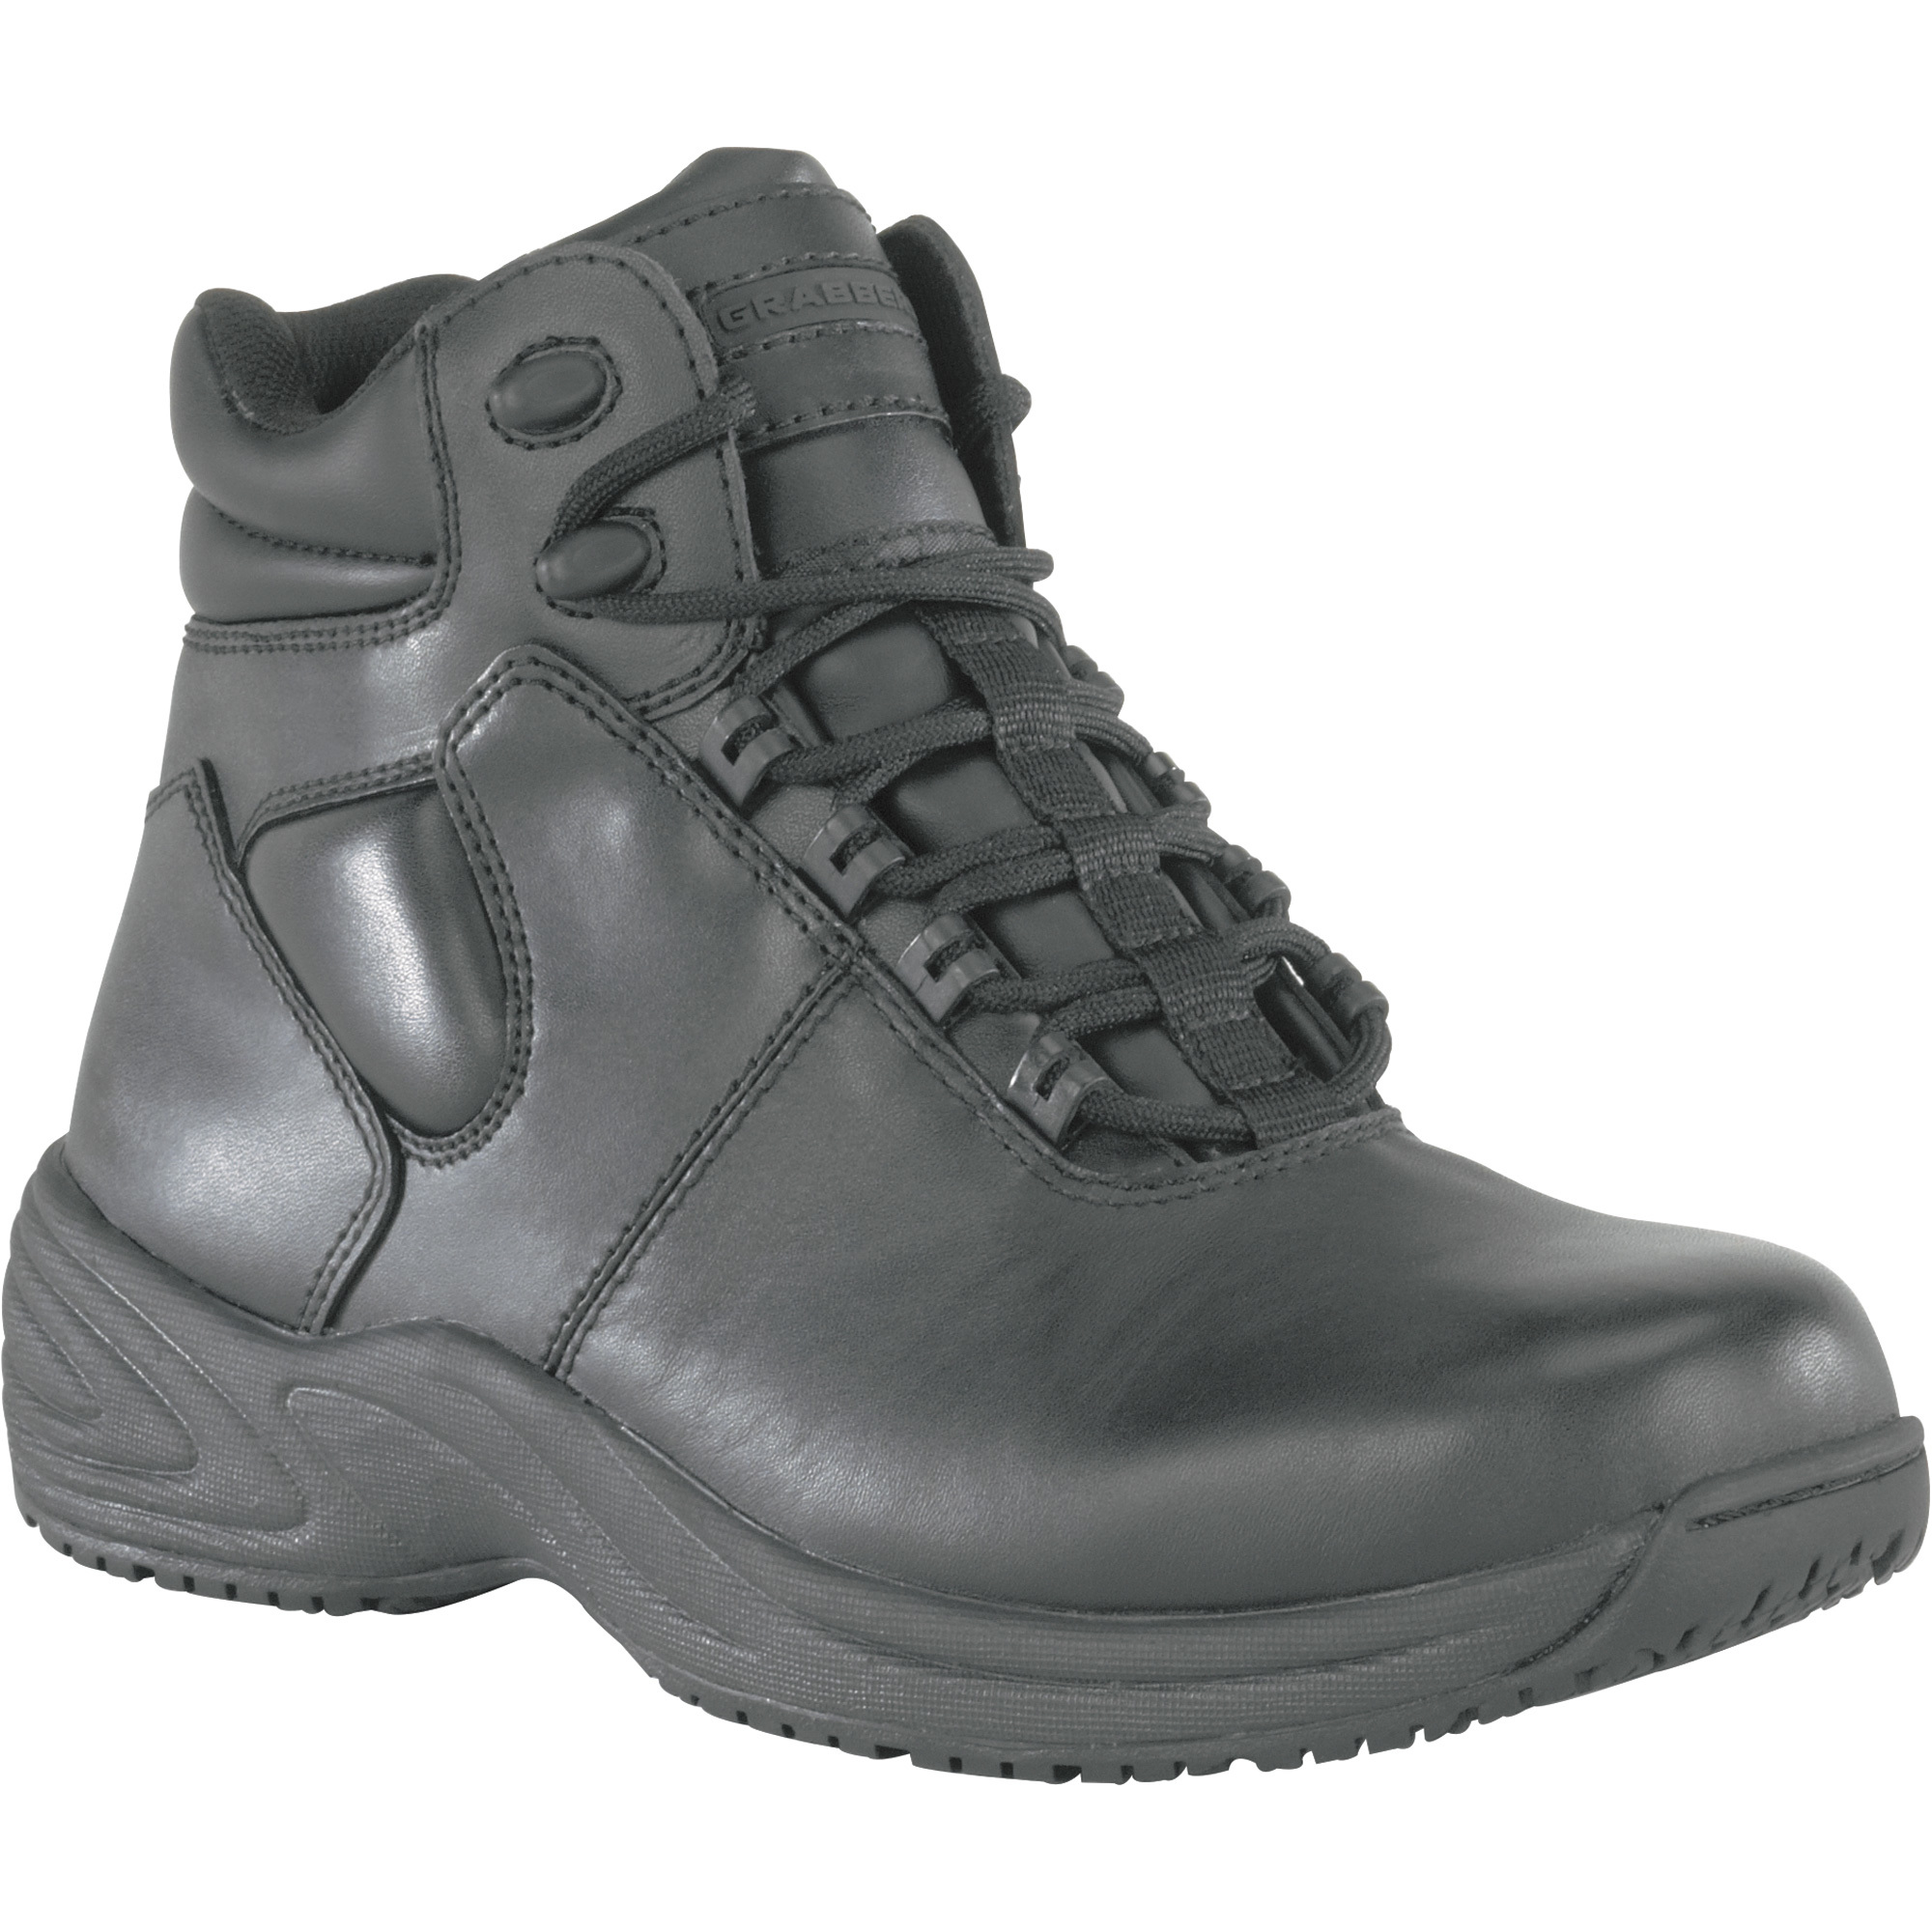 Grabbers Men's 6Inch Fastener Work Boots - Black, Size 6 1/2 Wide, Model G1240